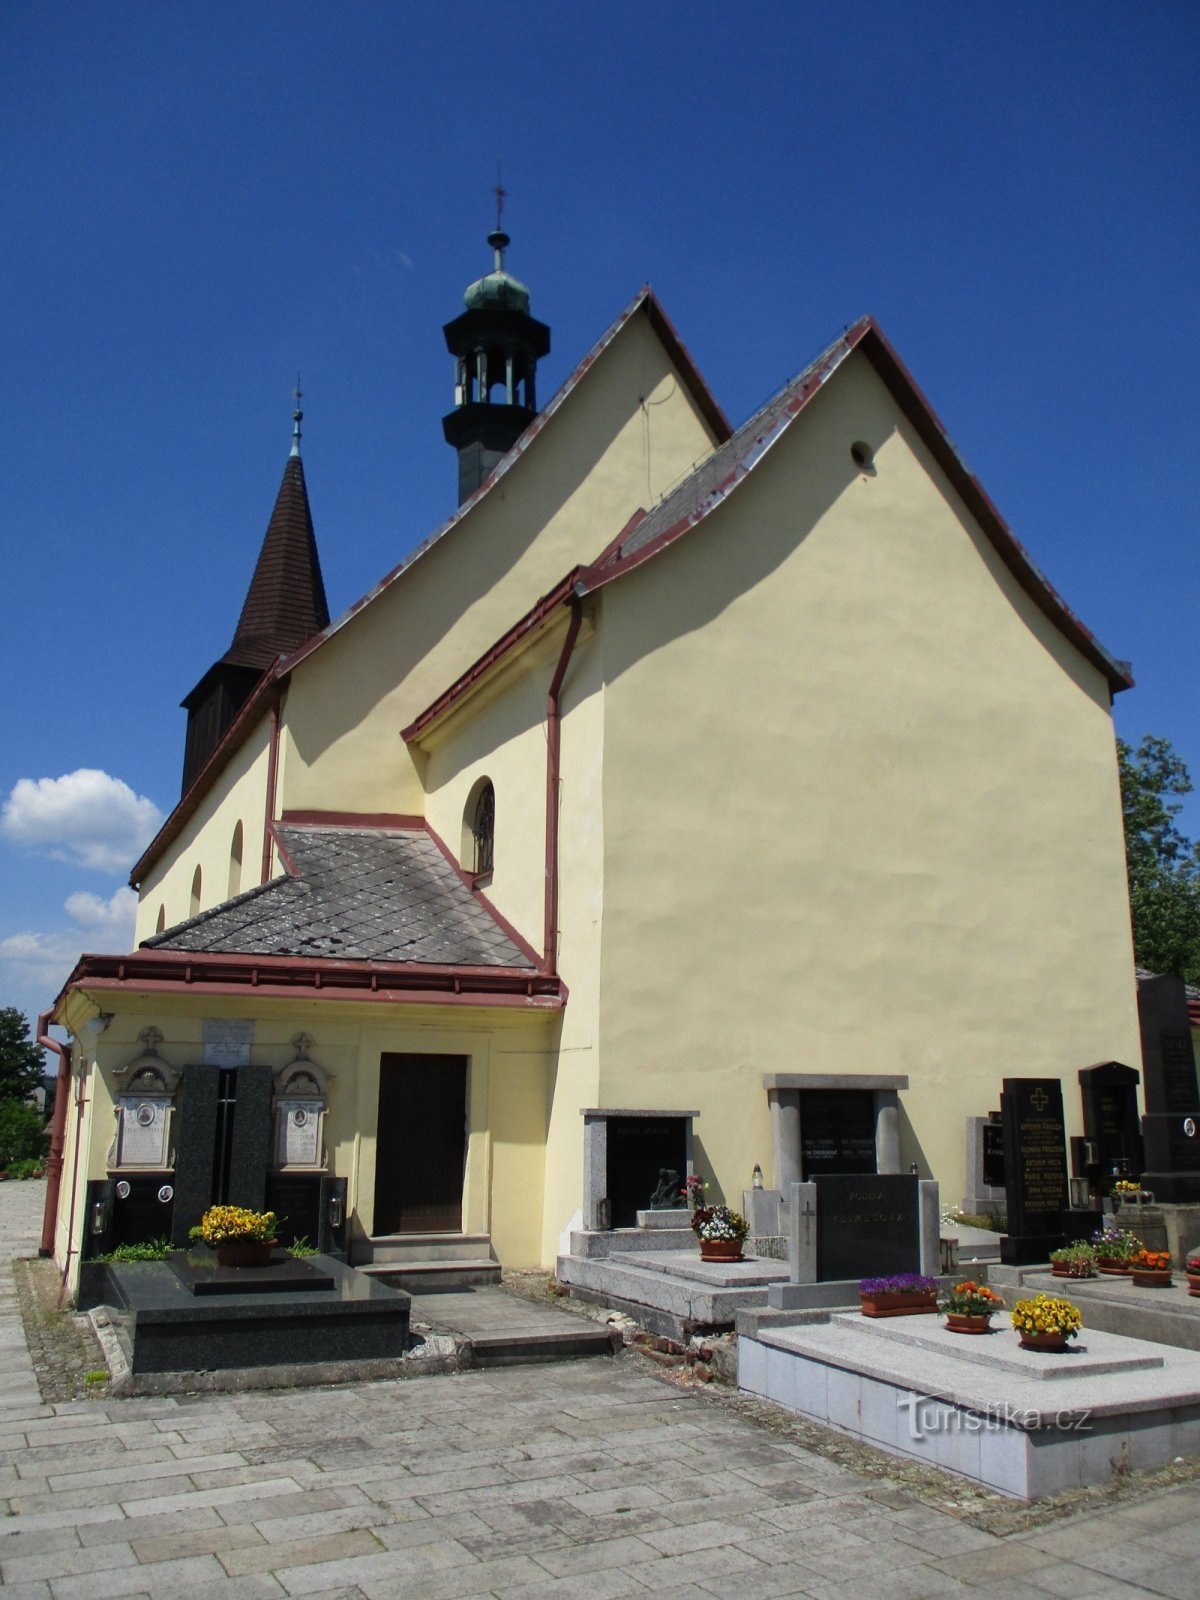 Kerk van St. Johannes de Doper (Rtyne in Podkrkonoší, 5.6.2019 juli XNUMX)